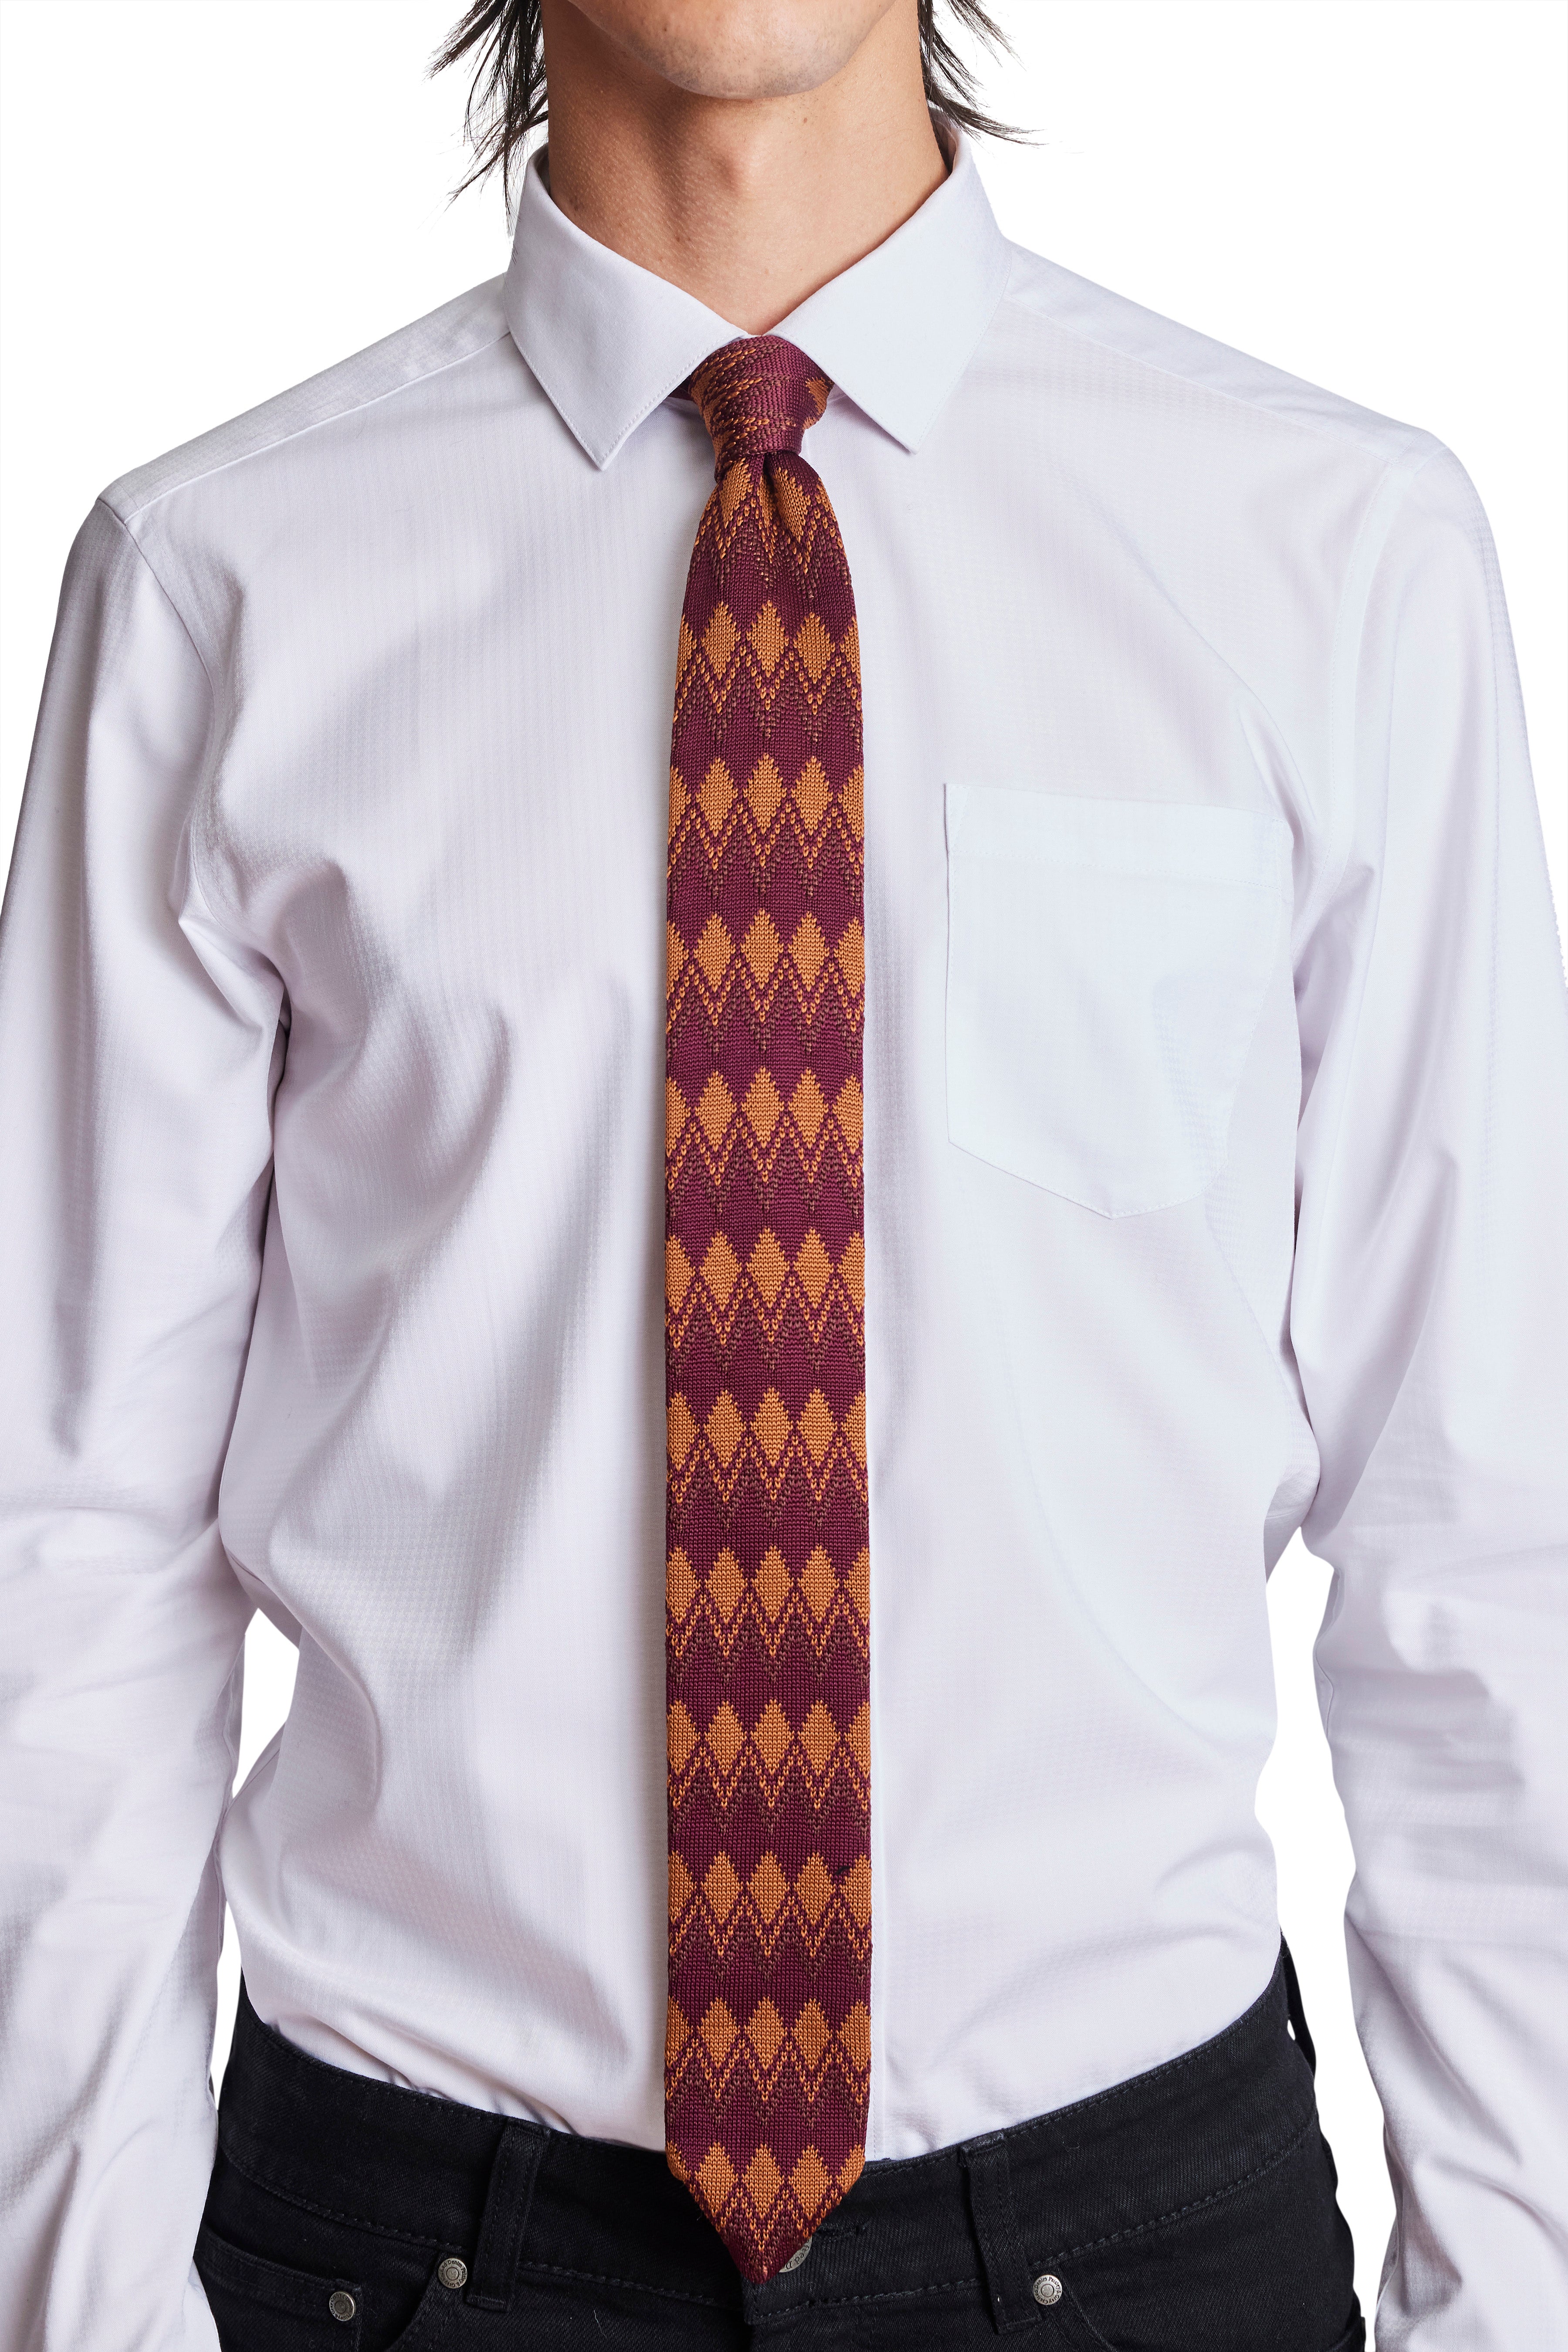 Stanley Lodge Knit Tie - Cherry Pecan